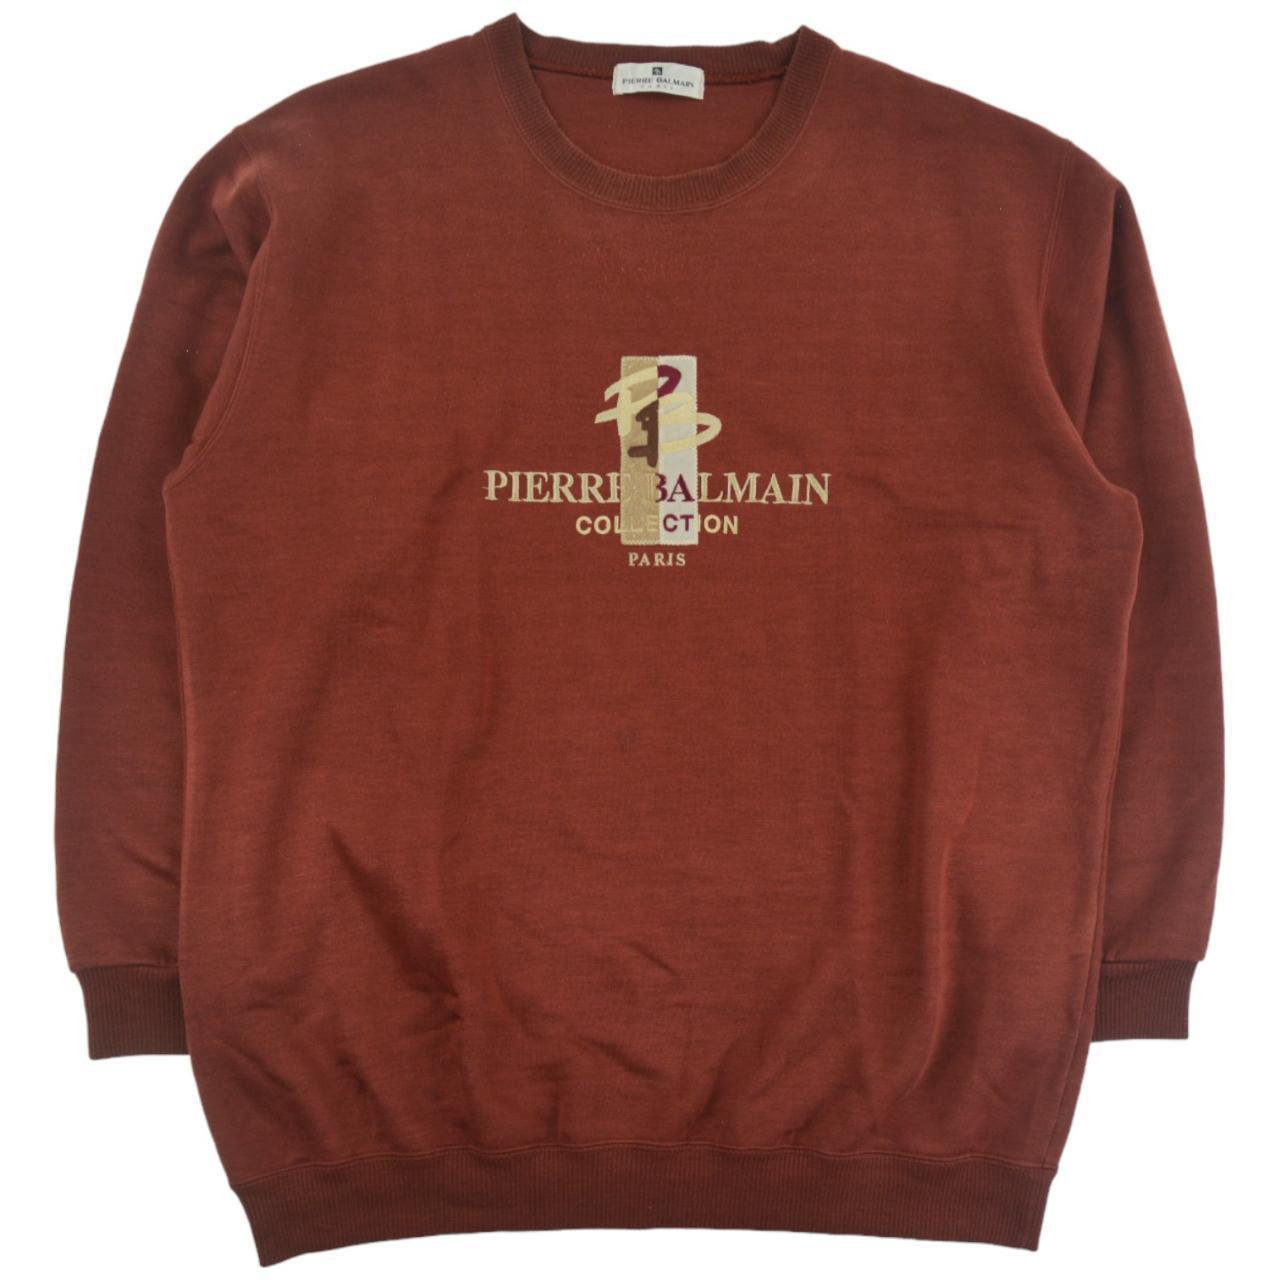 Vintage Pierre Balmain Sweatshirt Size L - Known Source